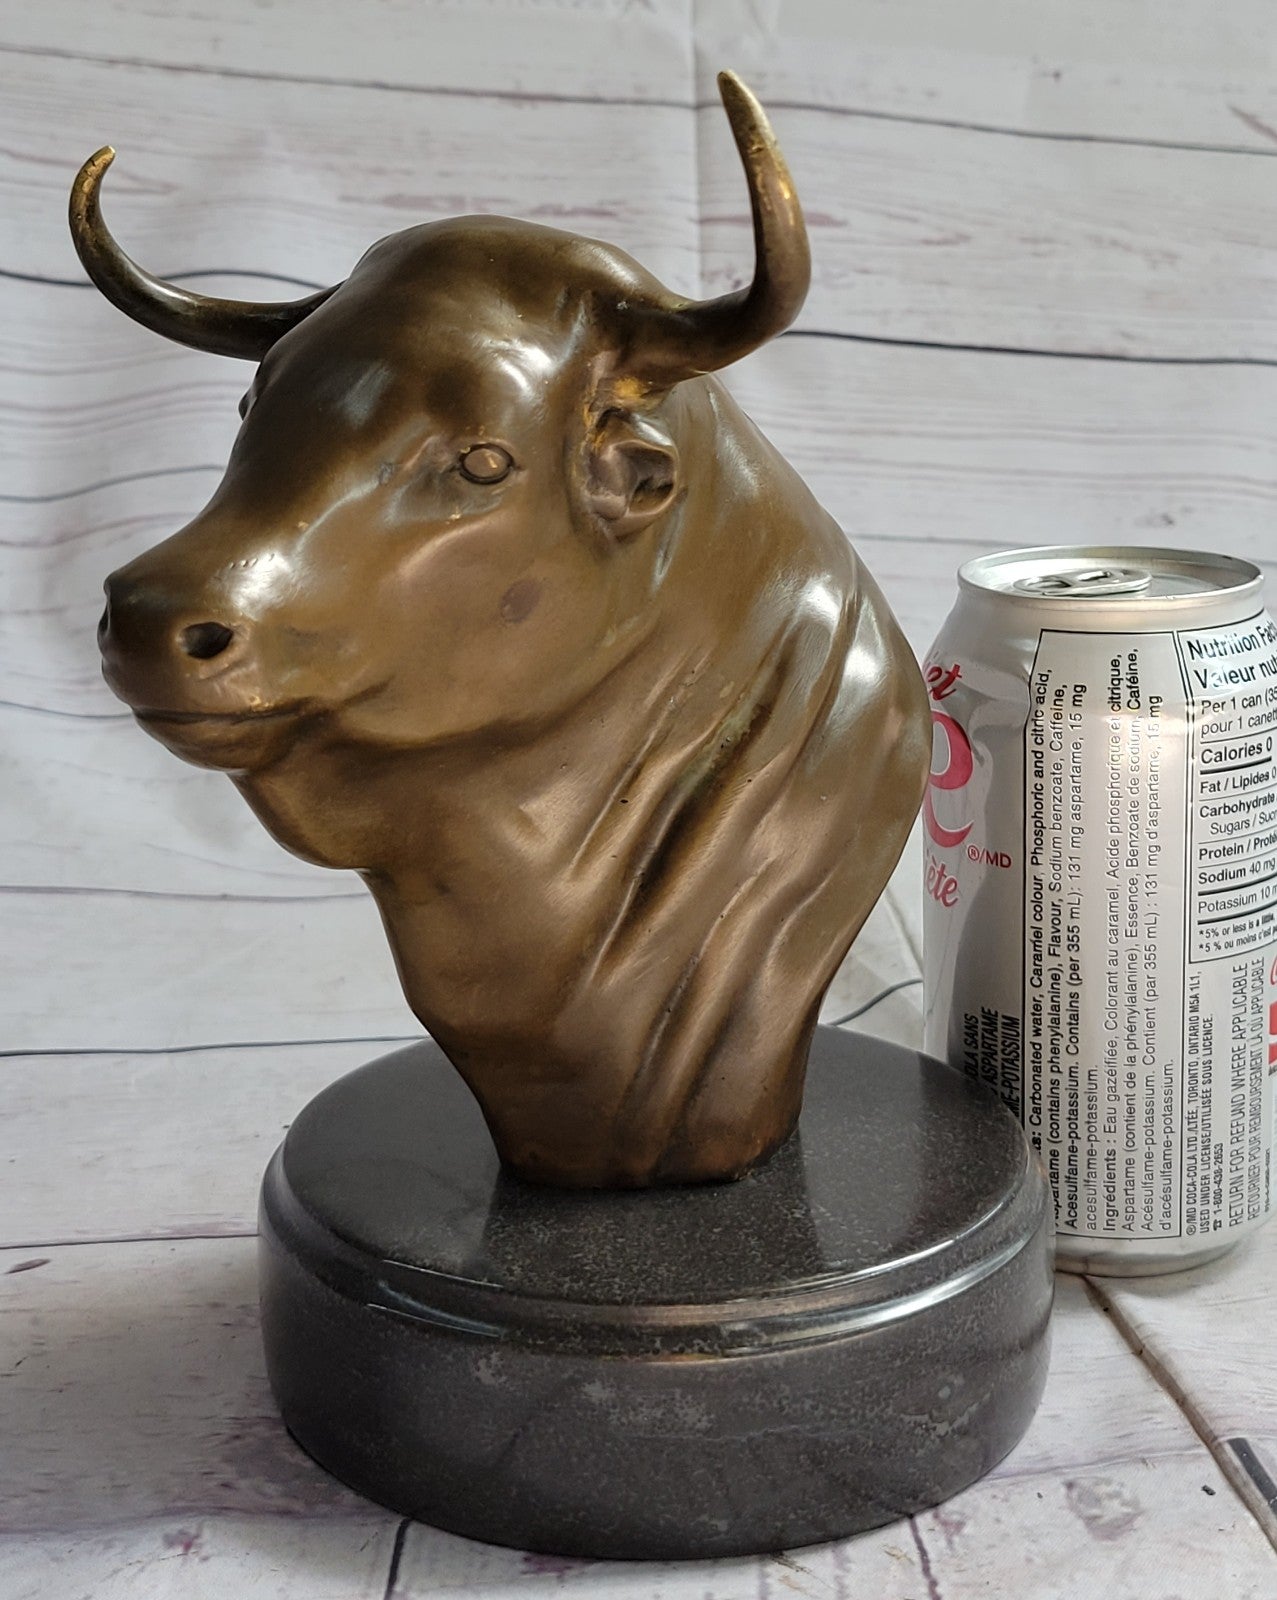 Stock Market Bull Bust - Wall Street Real Bronze Statue Figurine 8.5"H Lost Wax